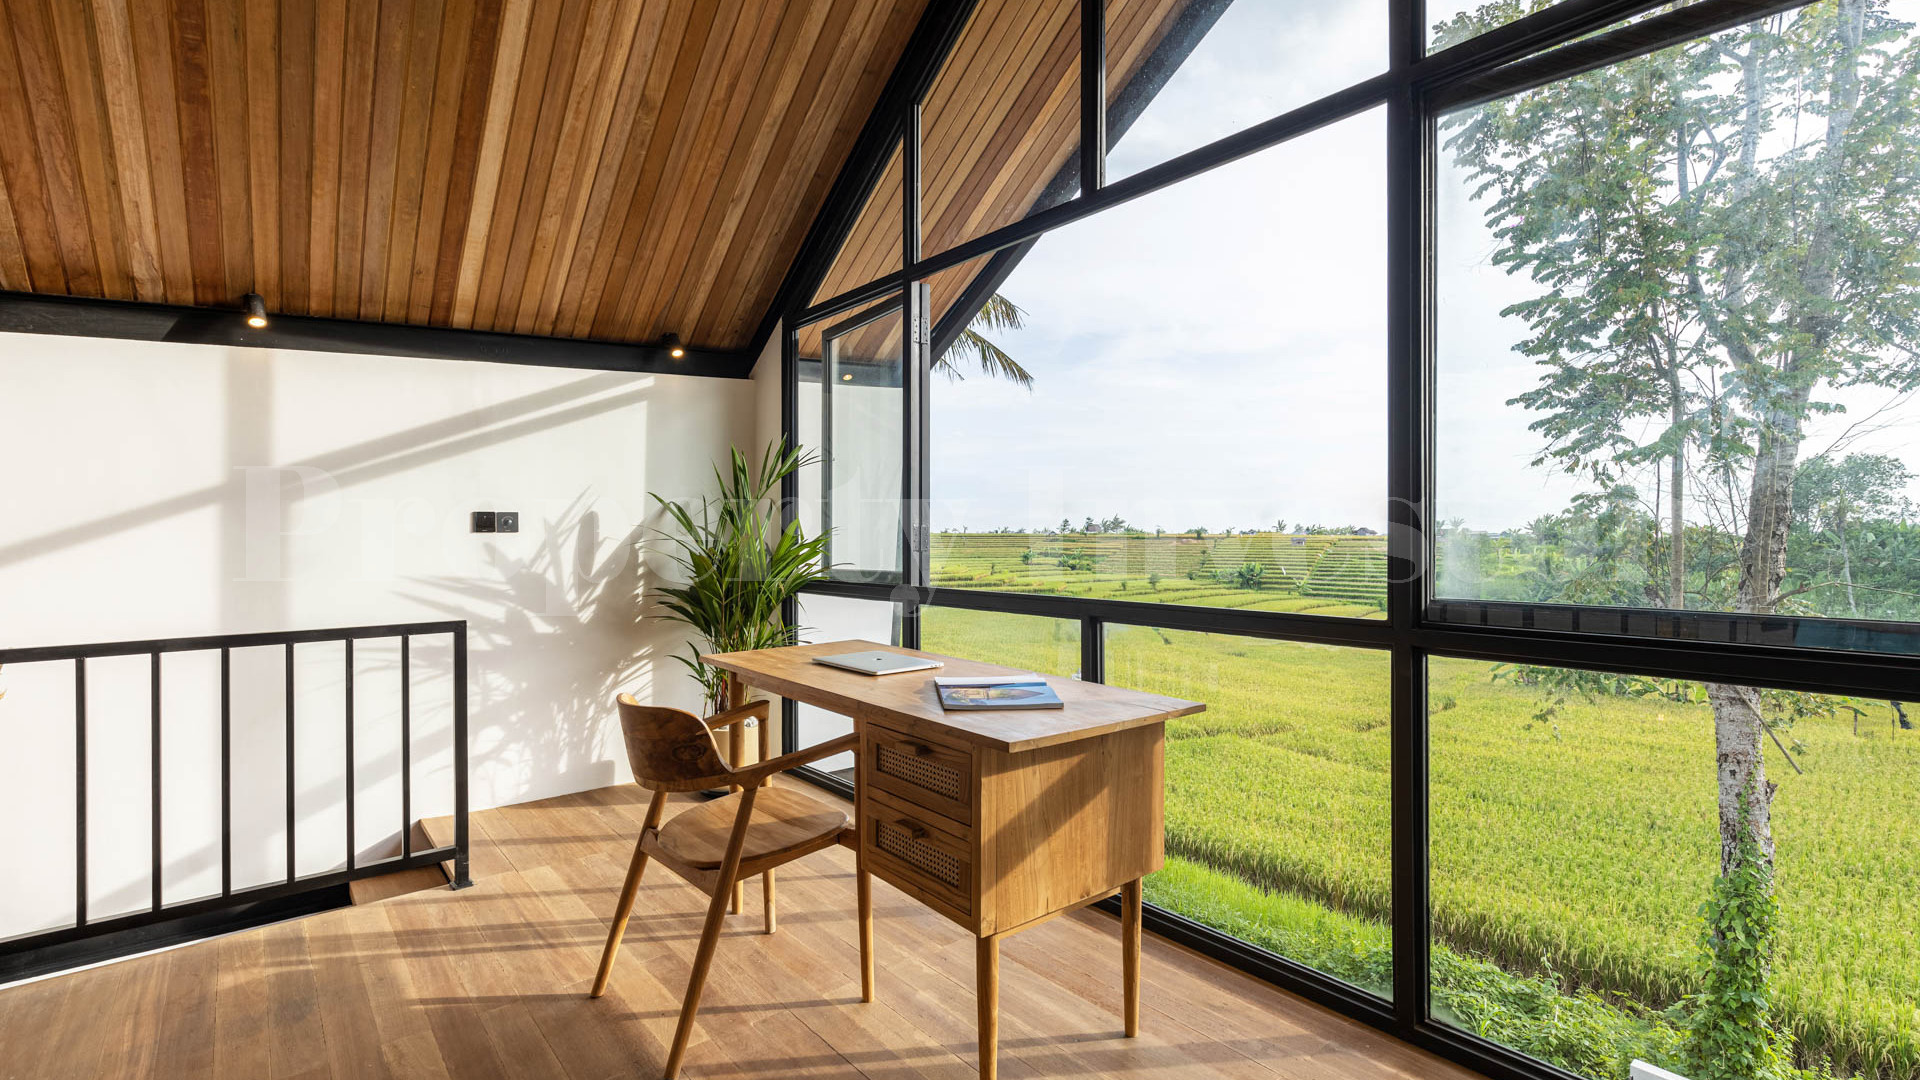 Chic 1-3 Bedroom Designer Loft Villas with Beautiful Rice Paddy Views for Sale Near Canggu, Bali